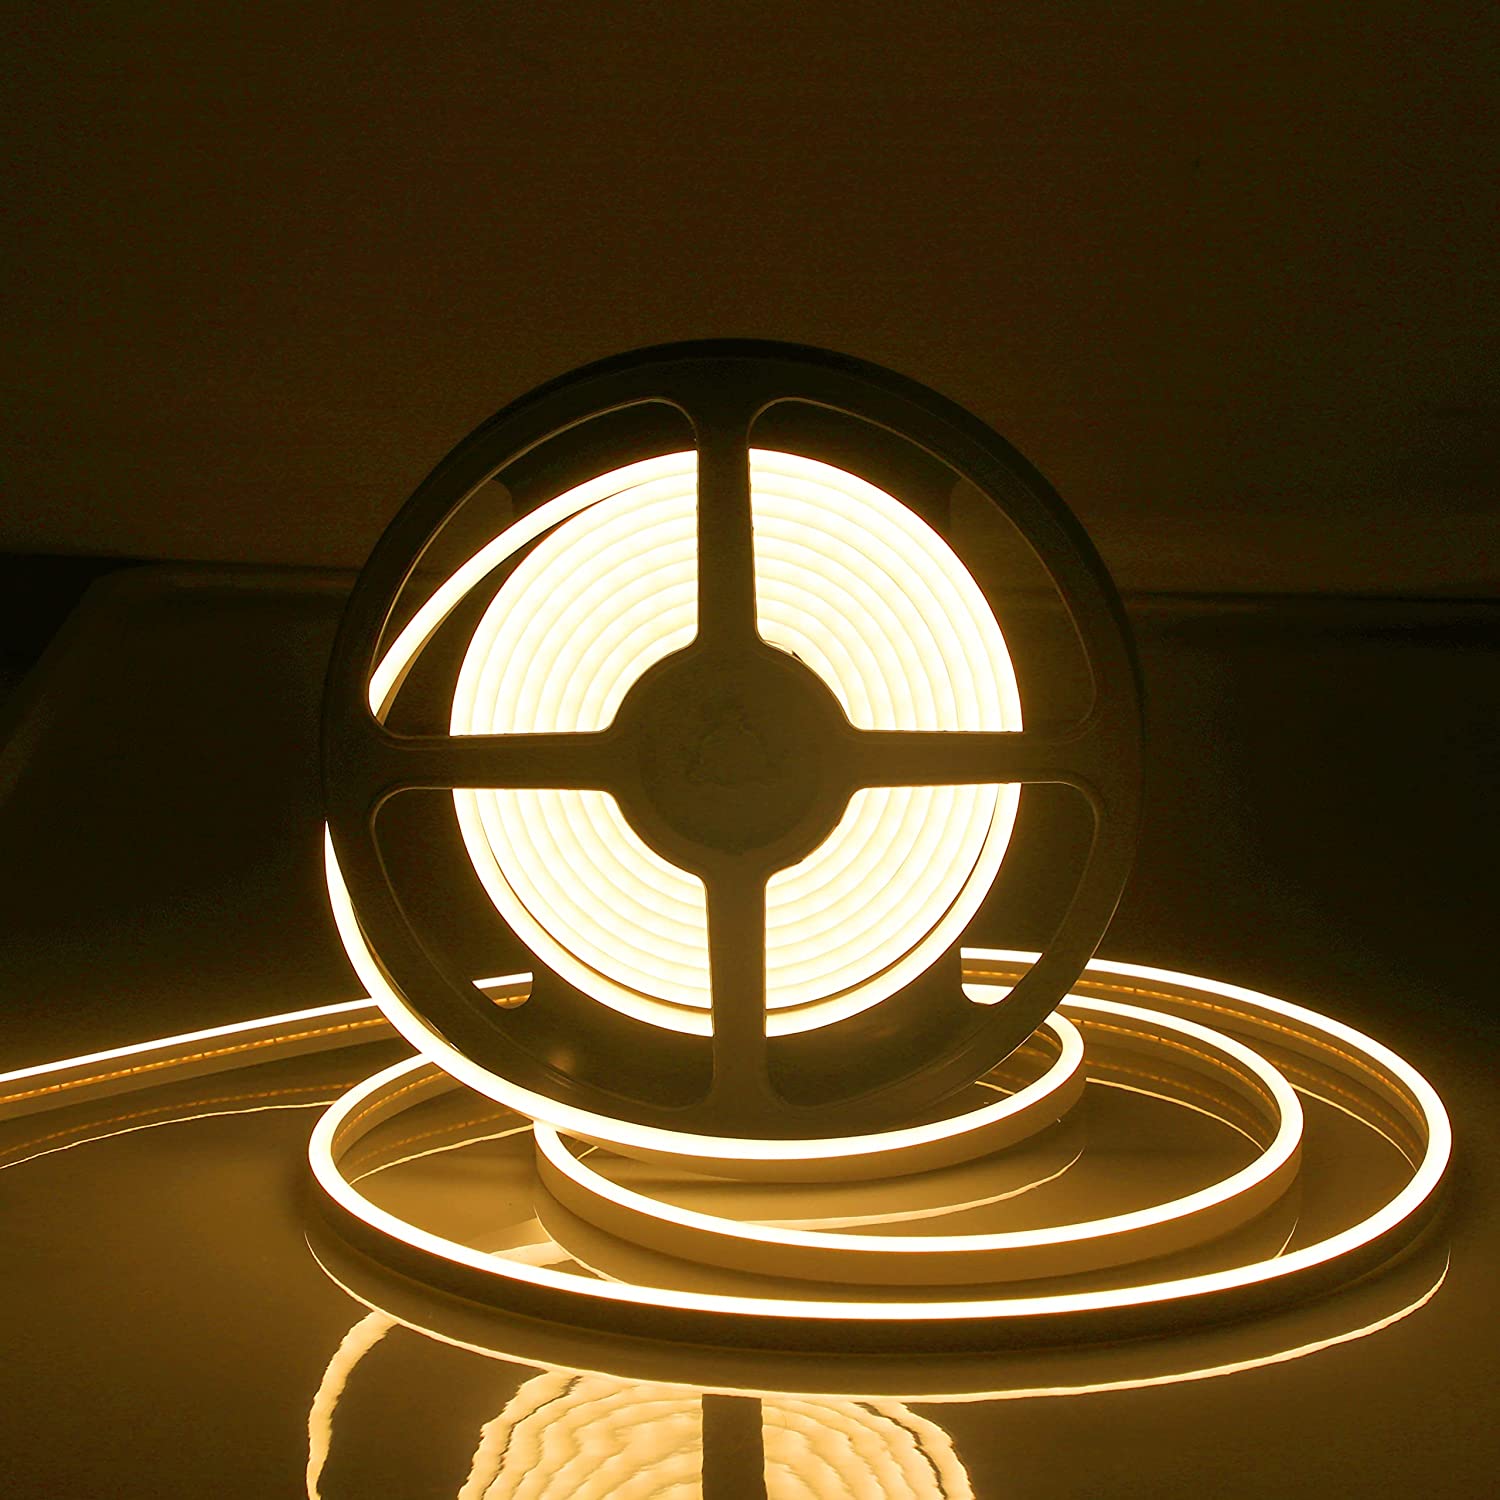 OWOFYDR Neon Light Strip Warm White 16.4FT/5M Neon Led Strip Lights Flex 12V DC Flexible Neon Rope Lights for Indoors Outdoors led Light for Bedroom decorm [ No Power Adapter]